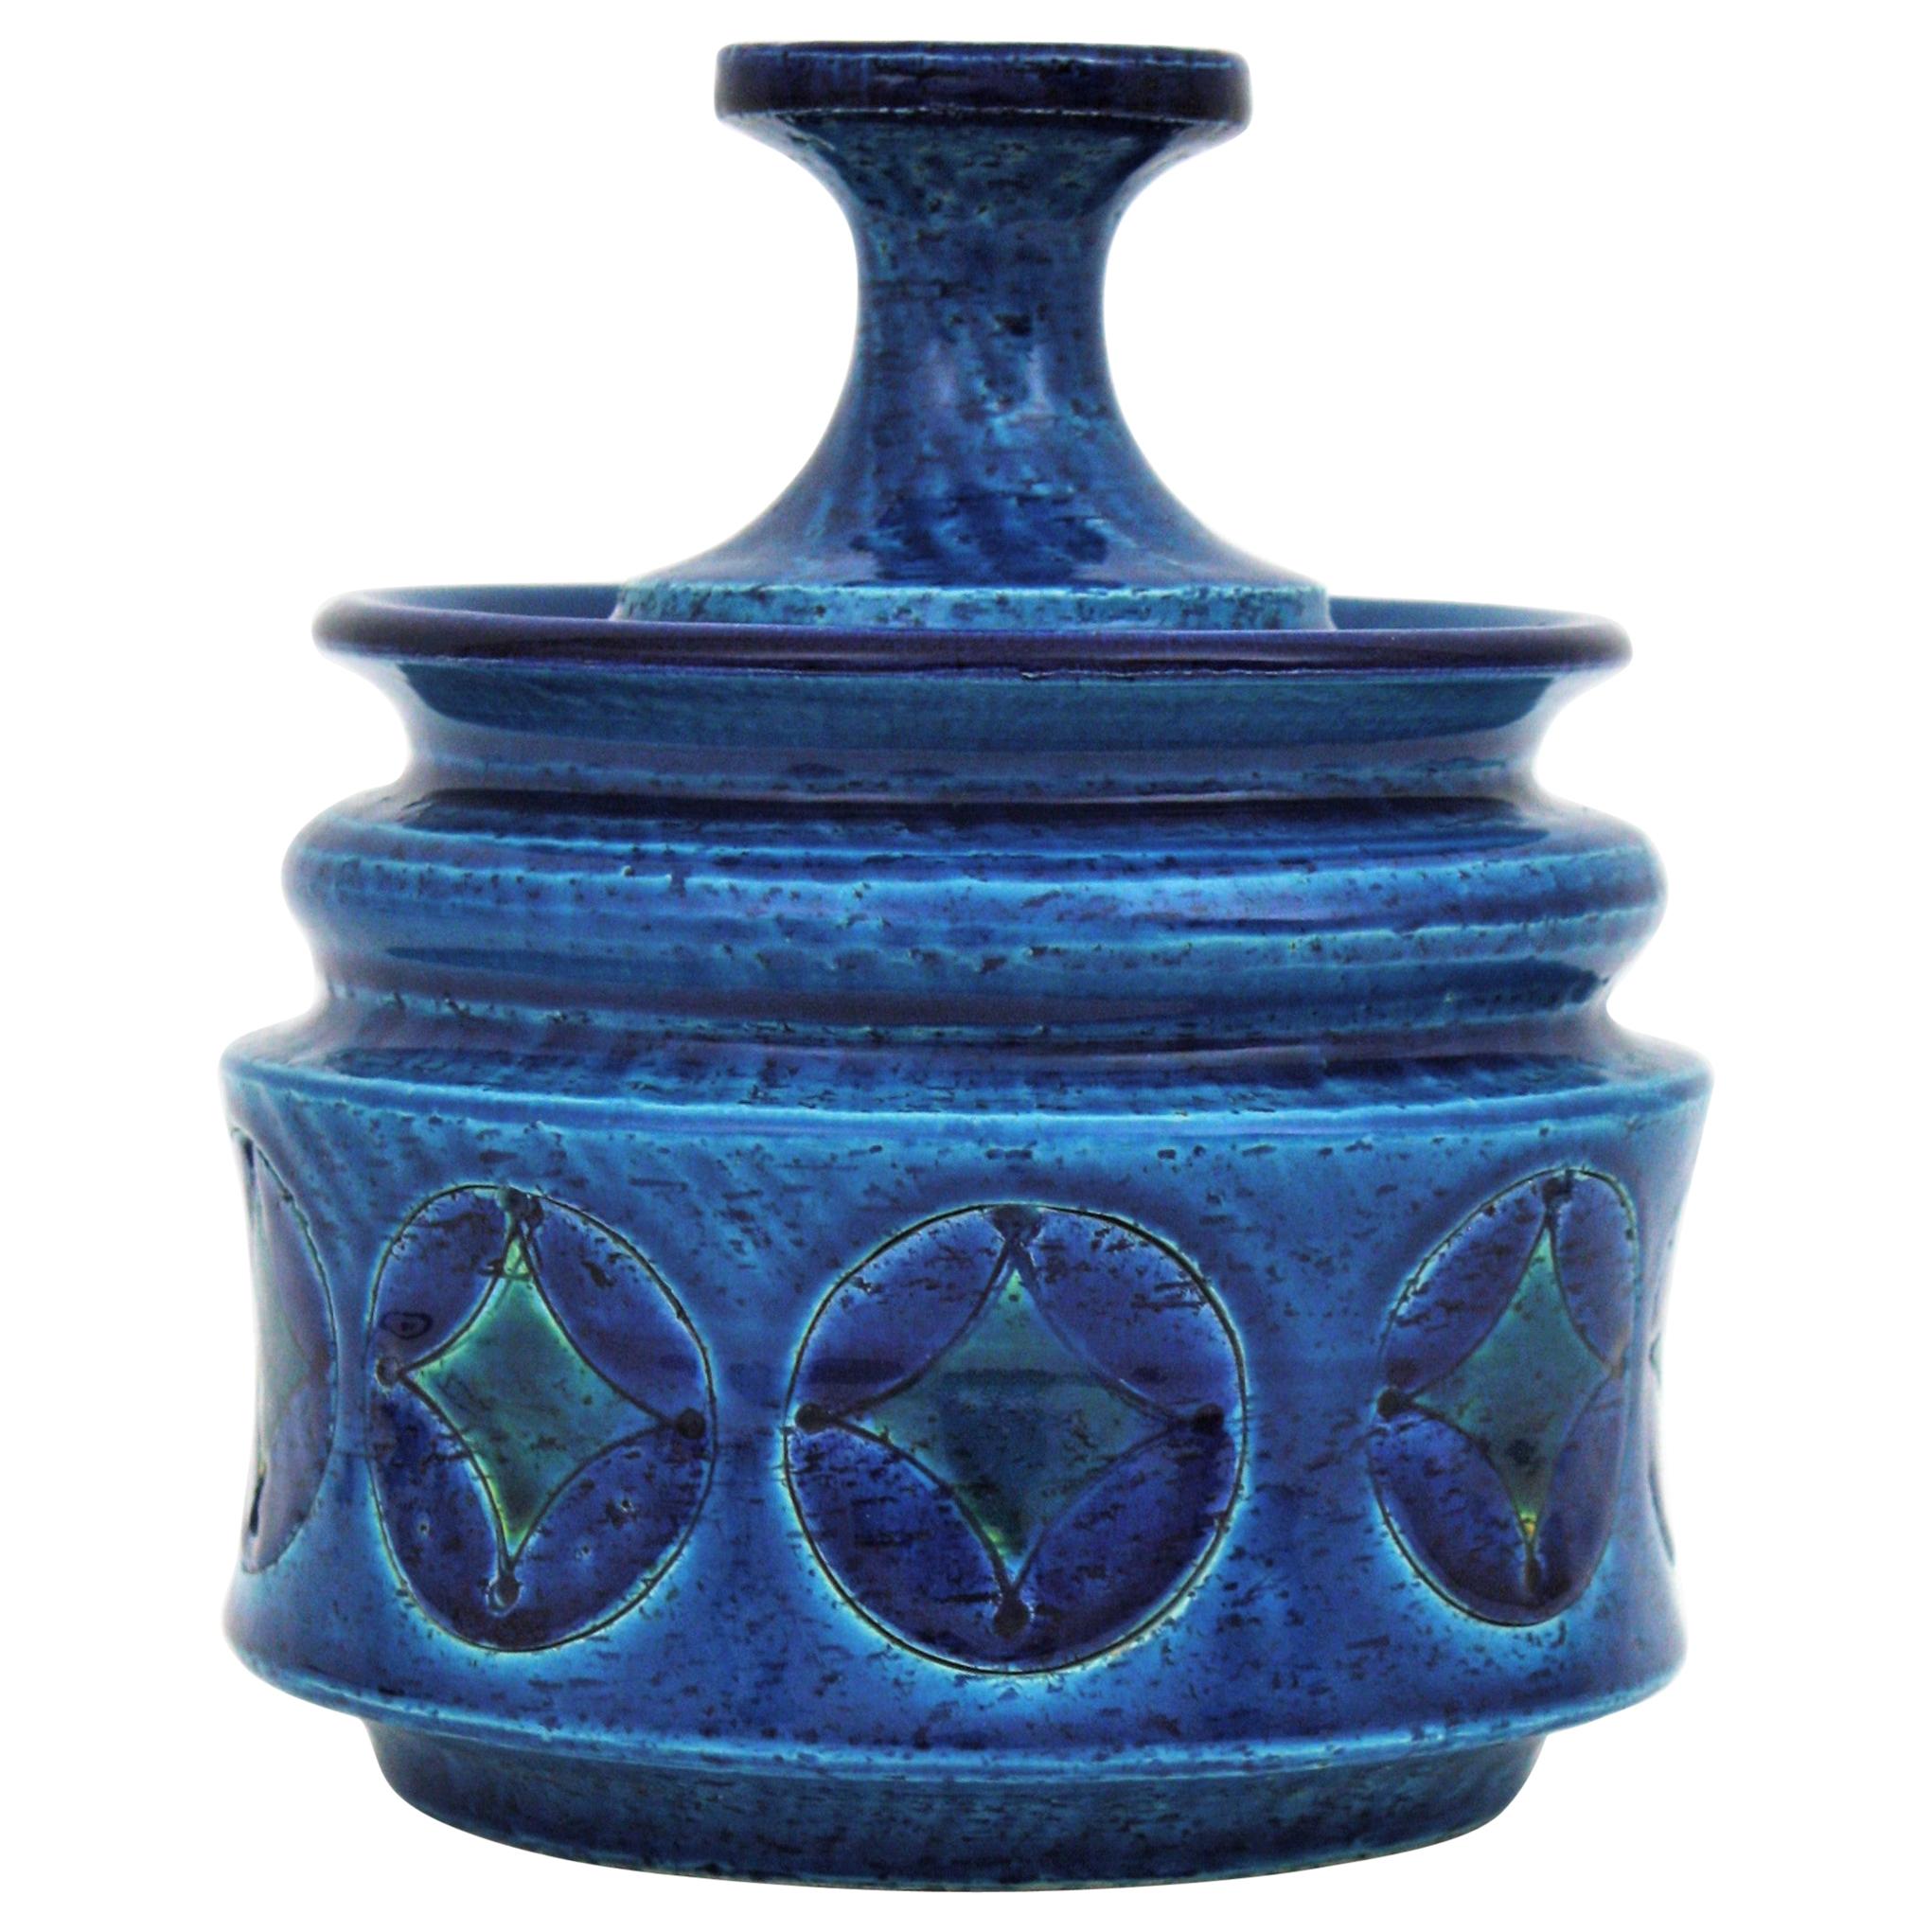 Aldo Londi Bitossi Blue Ceramic Lidded Box / Pot Circles and Rhombus Motif